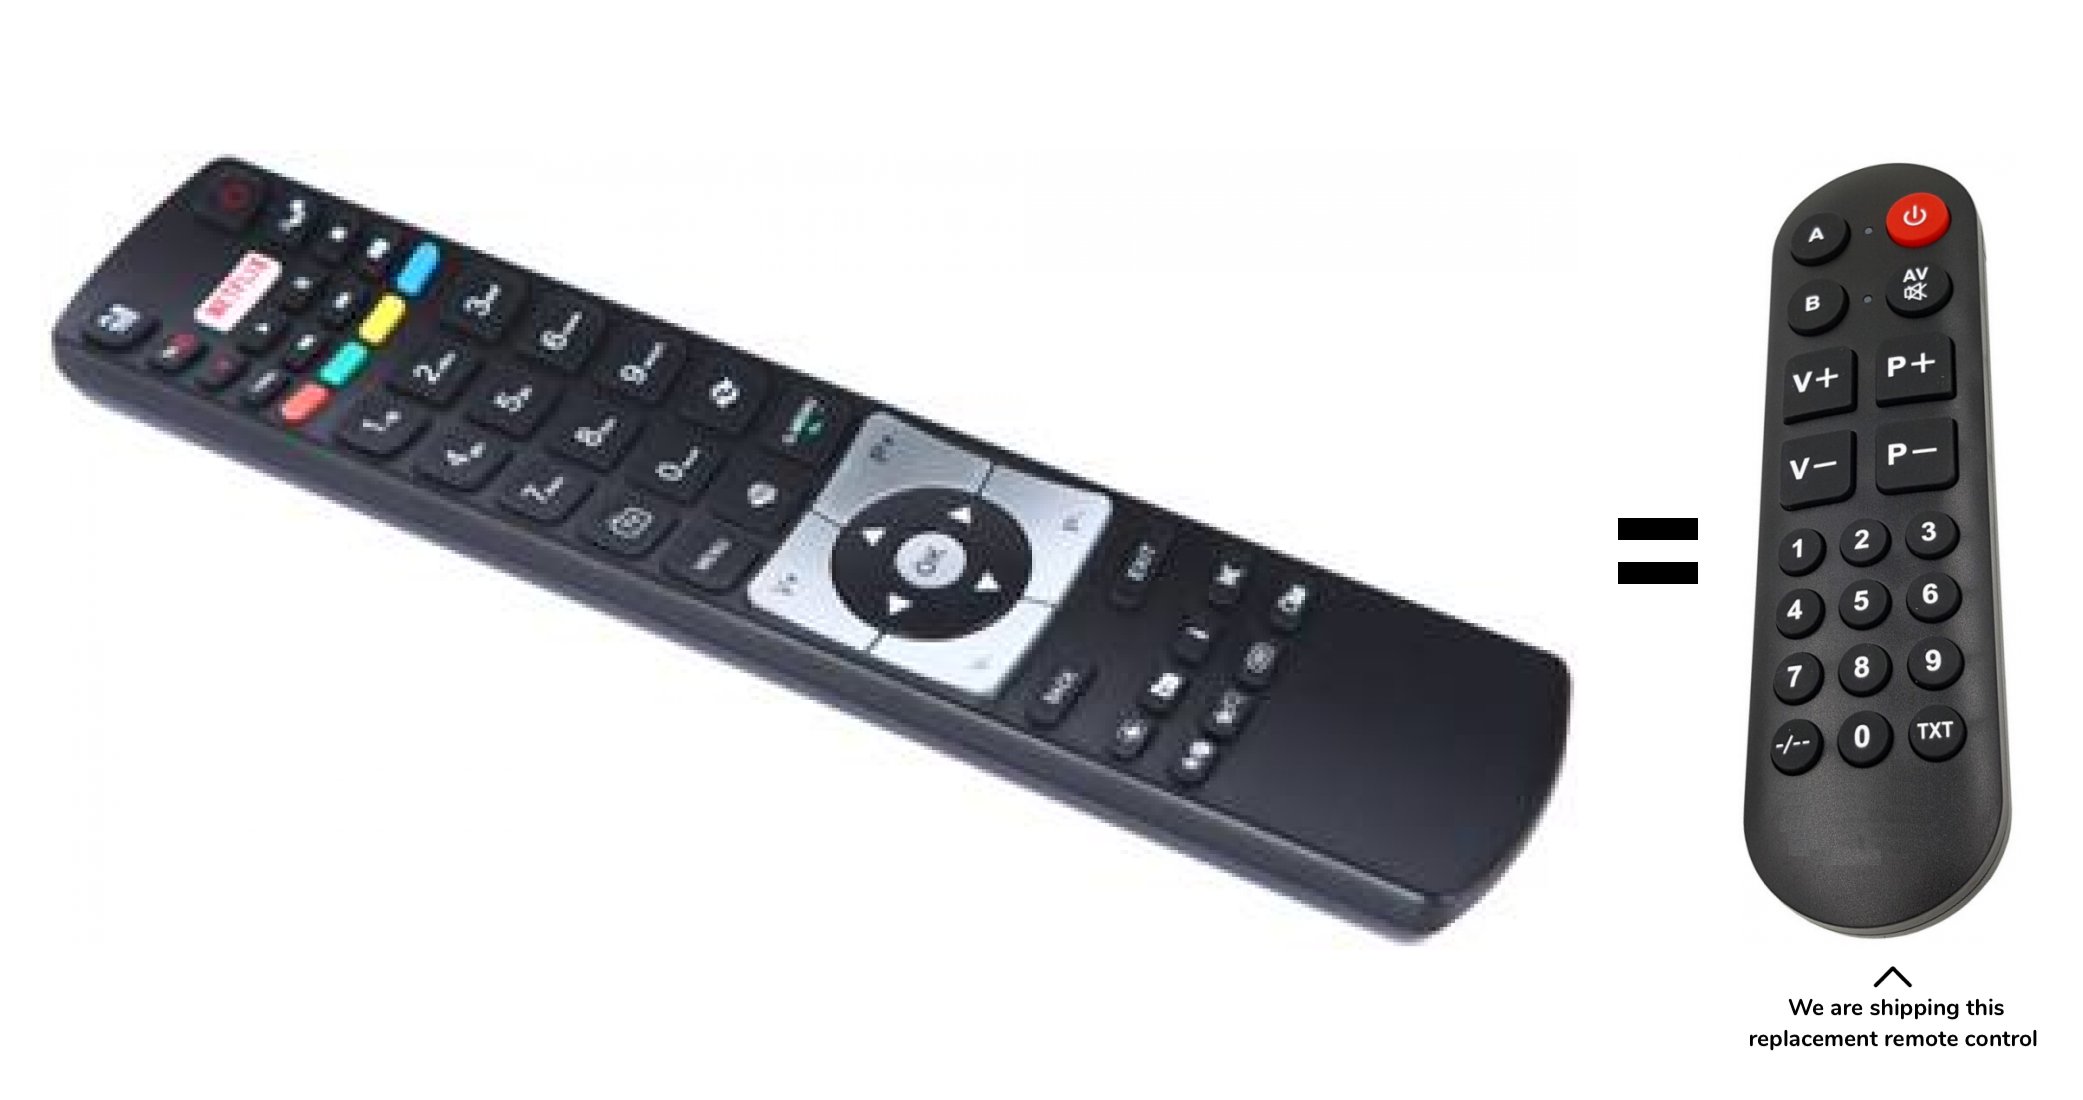 Finlux TVF40FFC5660, TVF32FFC5760 remote control for seniors